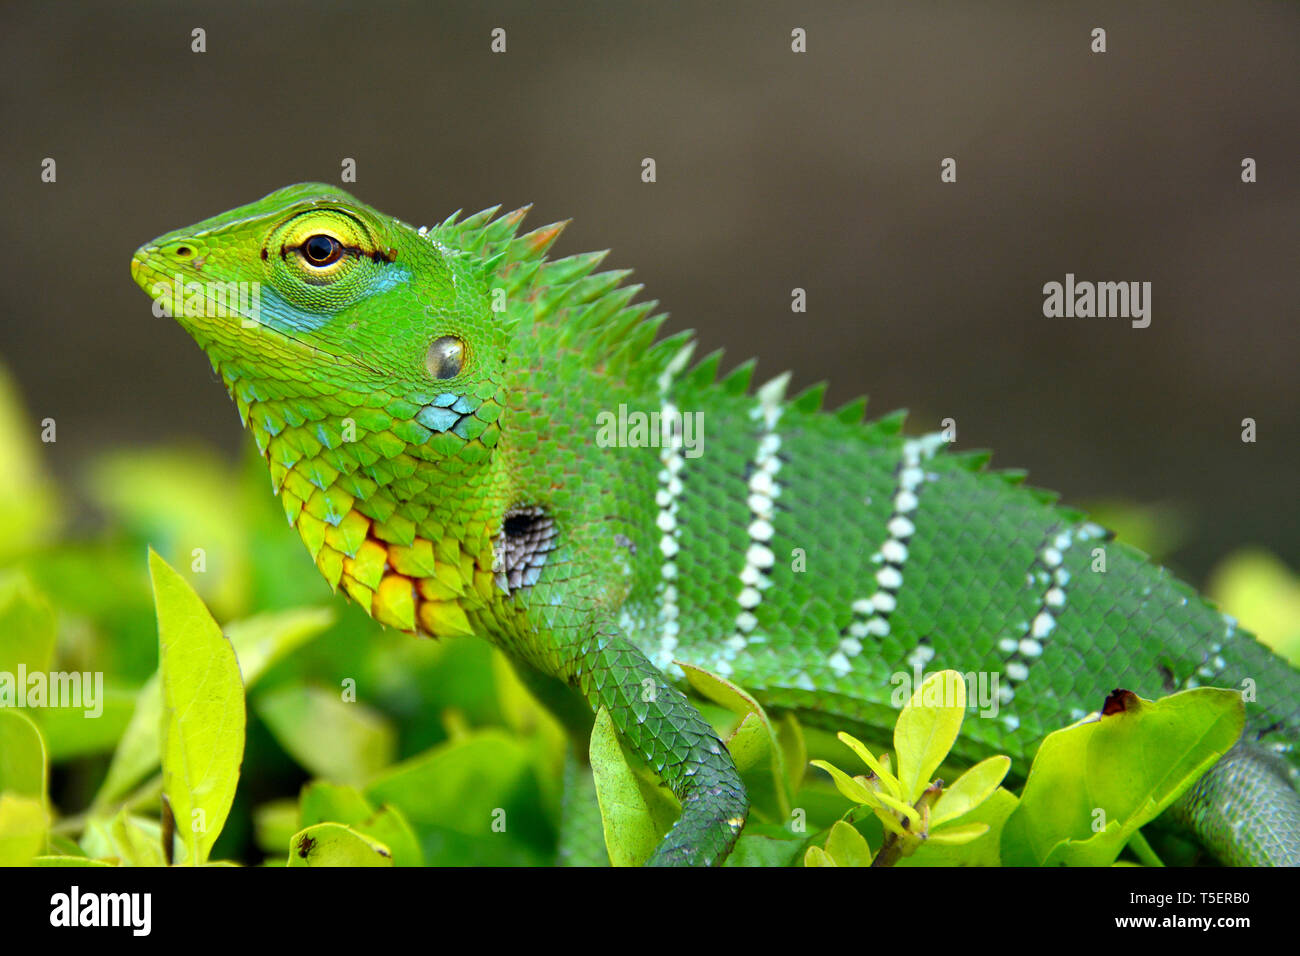 common green forest lizard, Calotes calotes, Sri Lanka Stock Photo Alamy